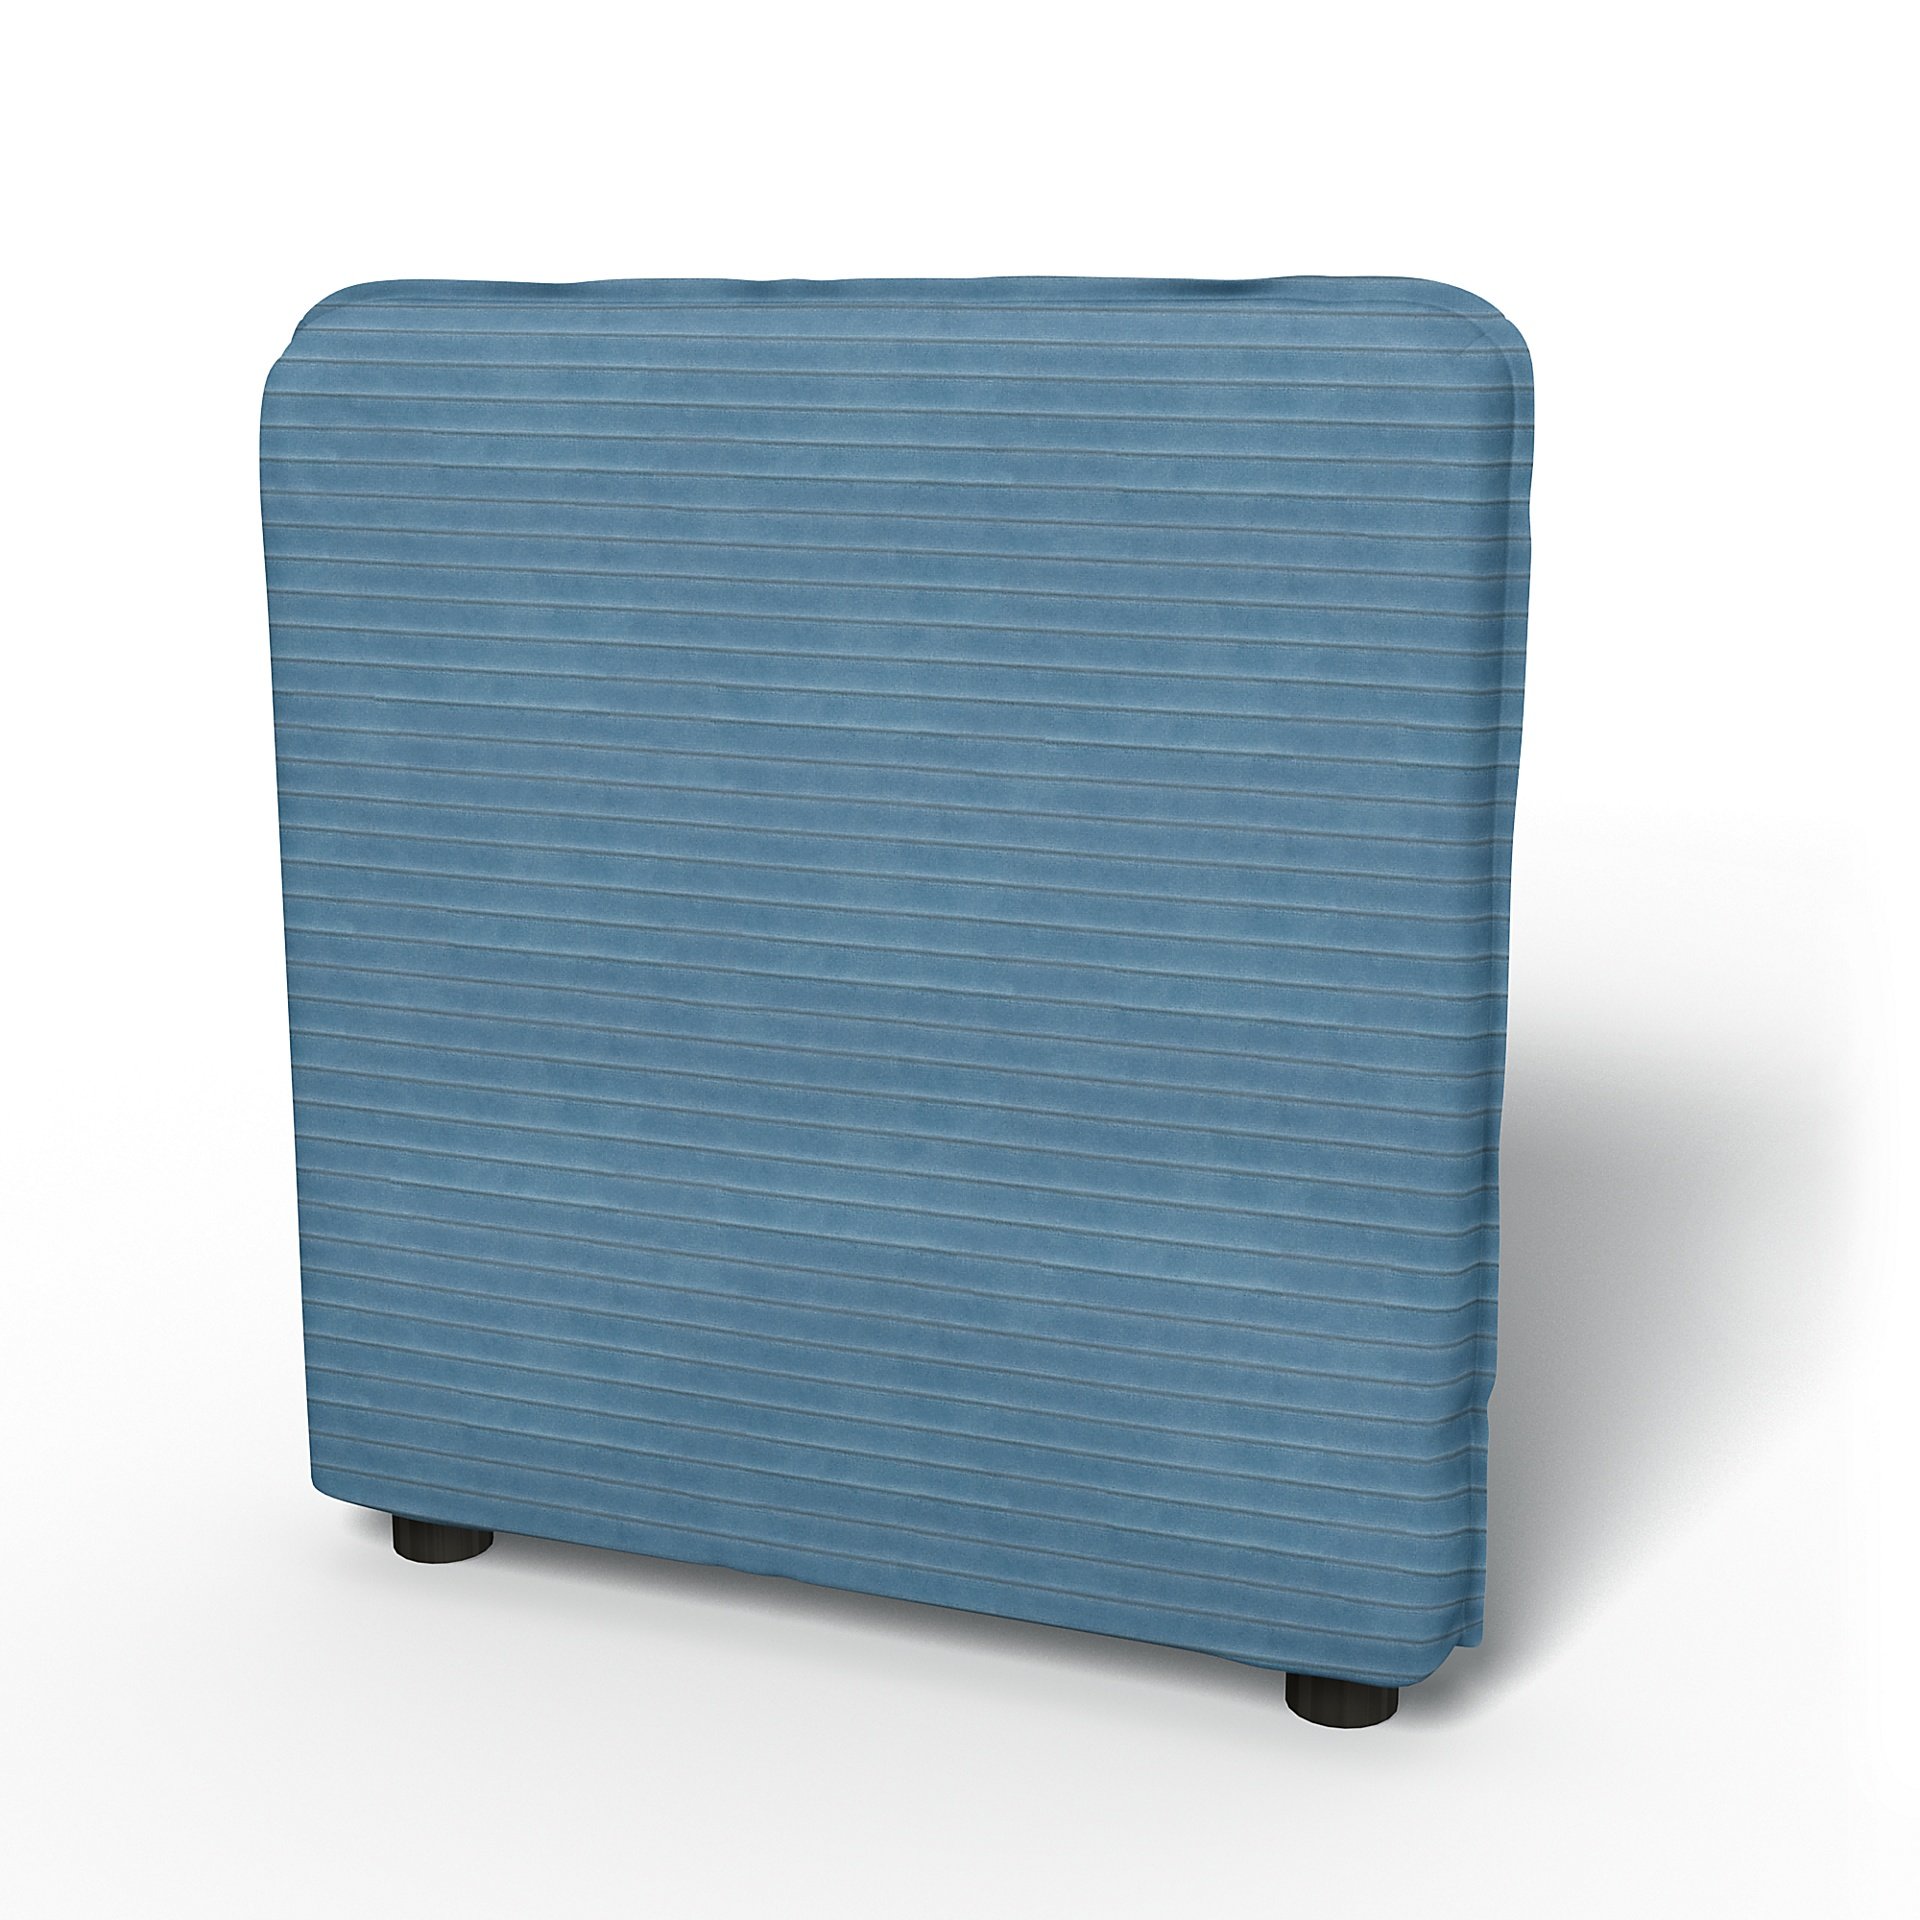 IKEA - Vallentuna Armrest Cover (80x60x13cm), Sky Blue, Corduroy - Bemz